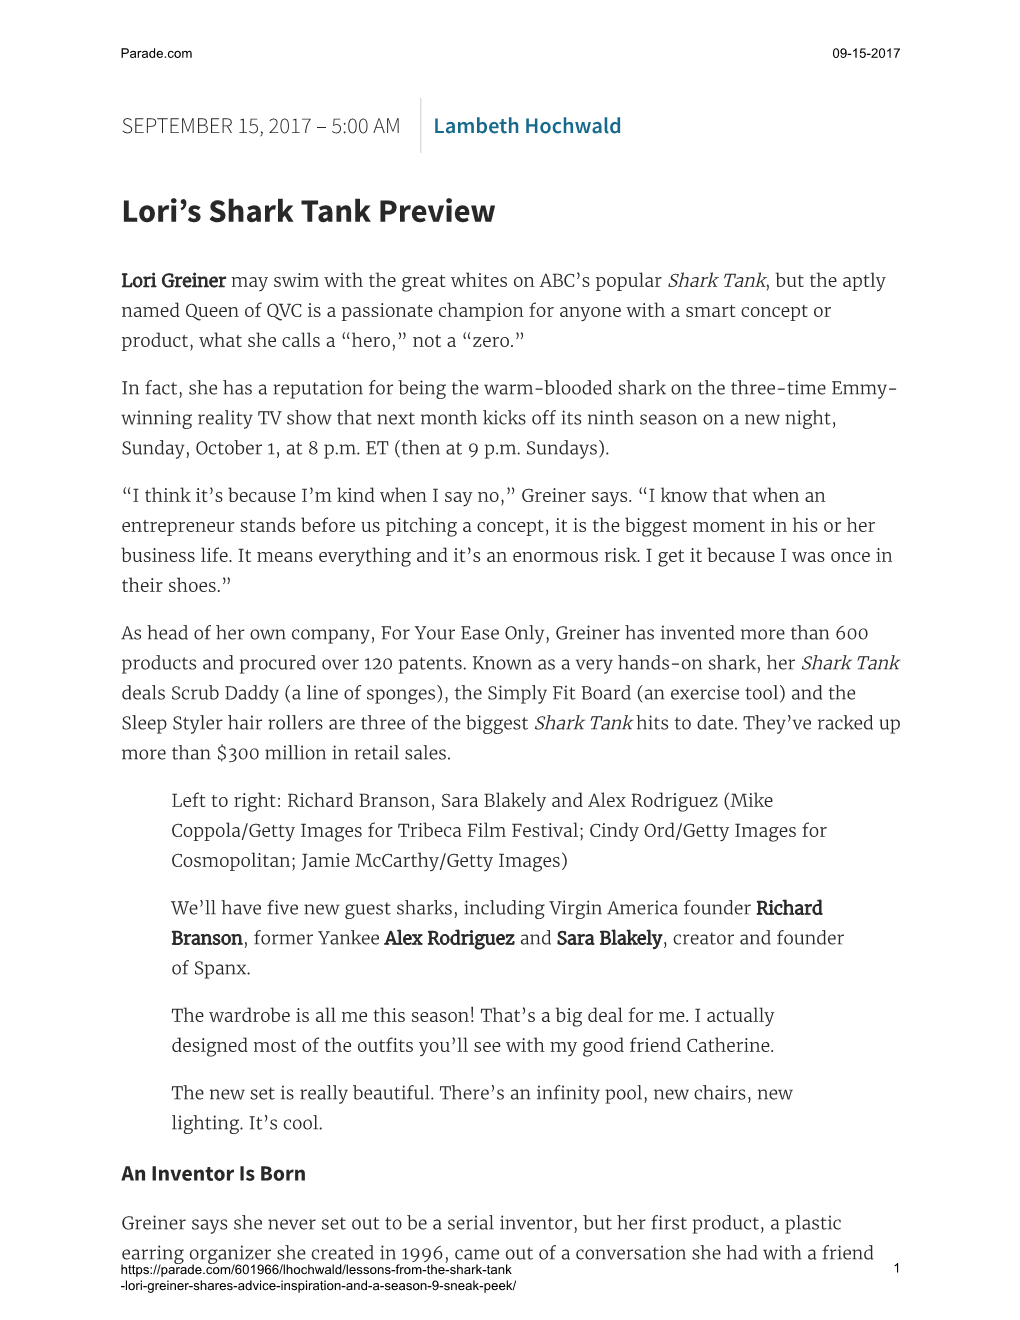 Lori's Shark Tank Preview